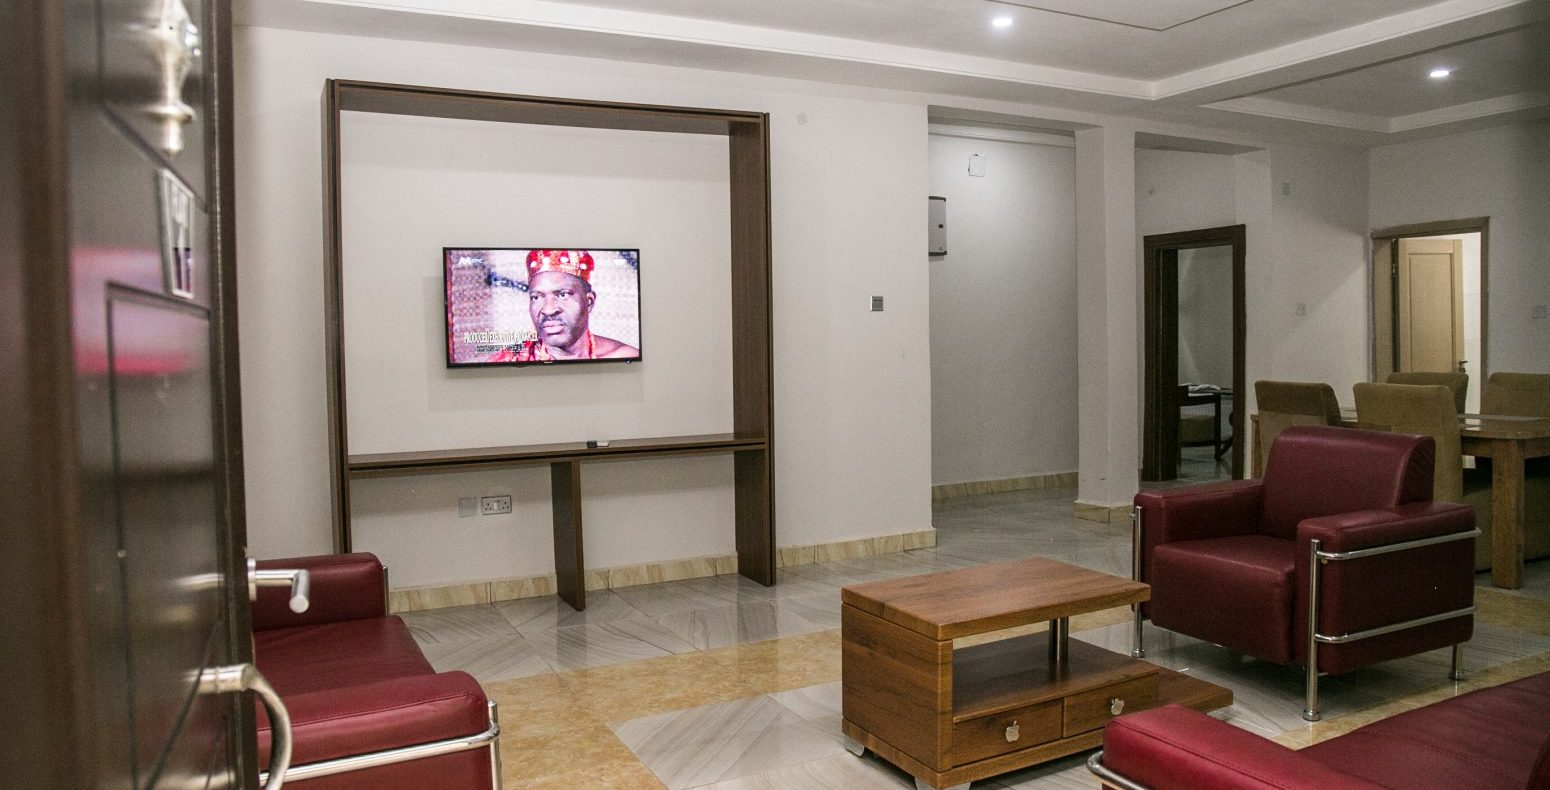 Hotel Deluxe Suites 2 Bedroom Suite In Abuja Fct Nigeria